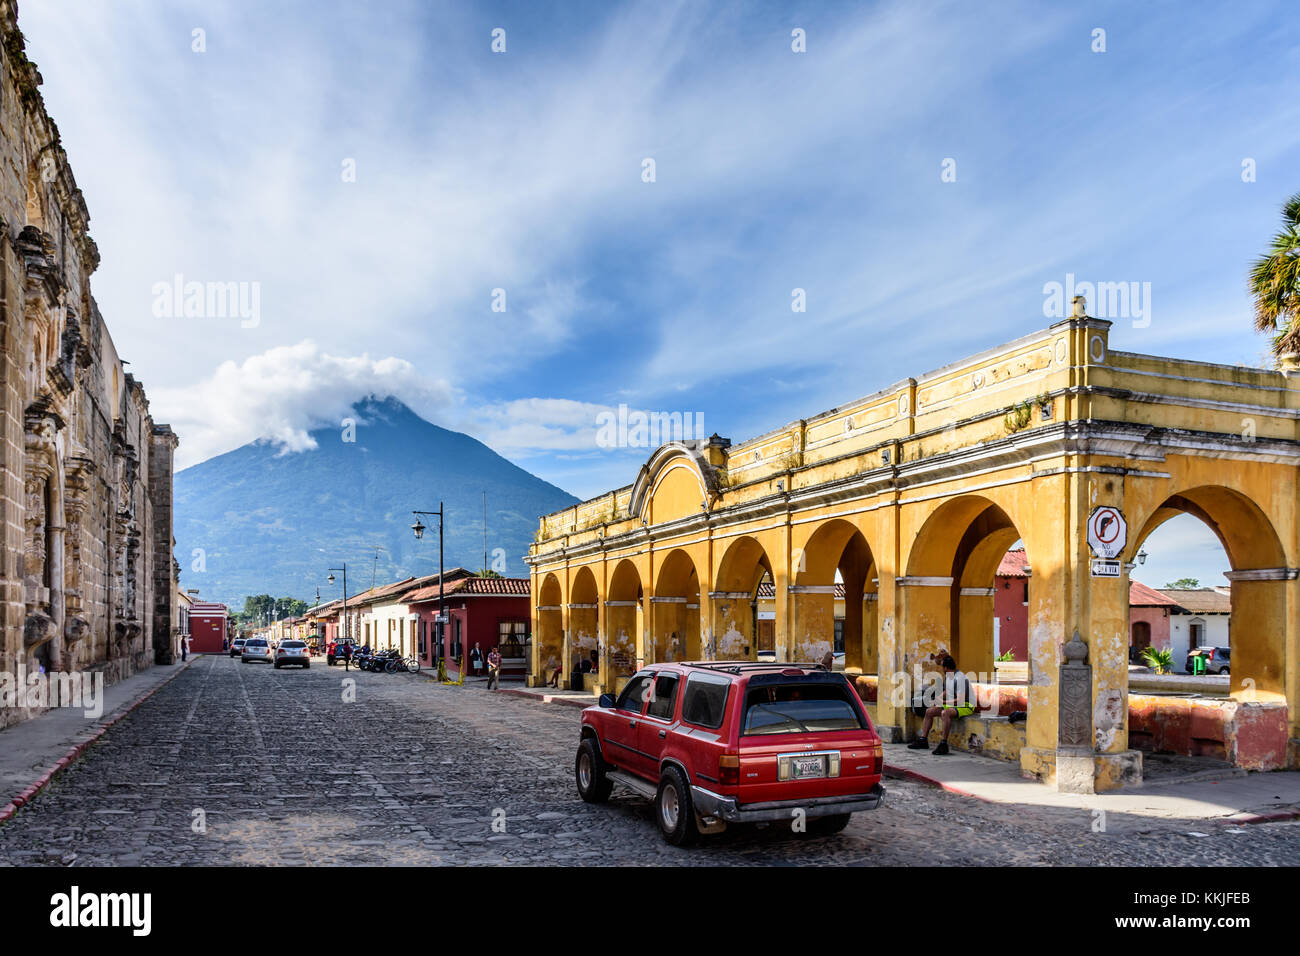 Antigua, Guatemala - Oktober 22, 2017: Santa Clara Ruinen, Tanque de la Union öffentliche Wäscherei Tank & agua Vulkan in der kolonialen Stadt Stockfoto